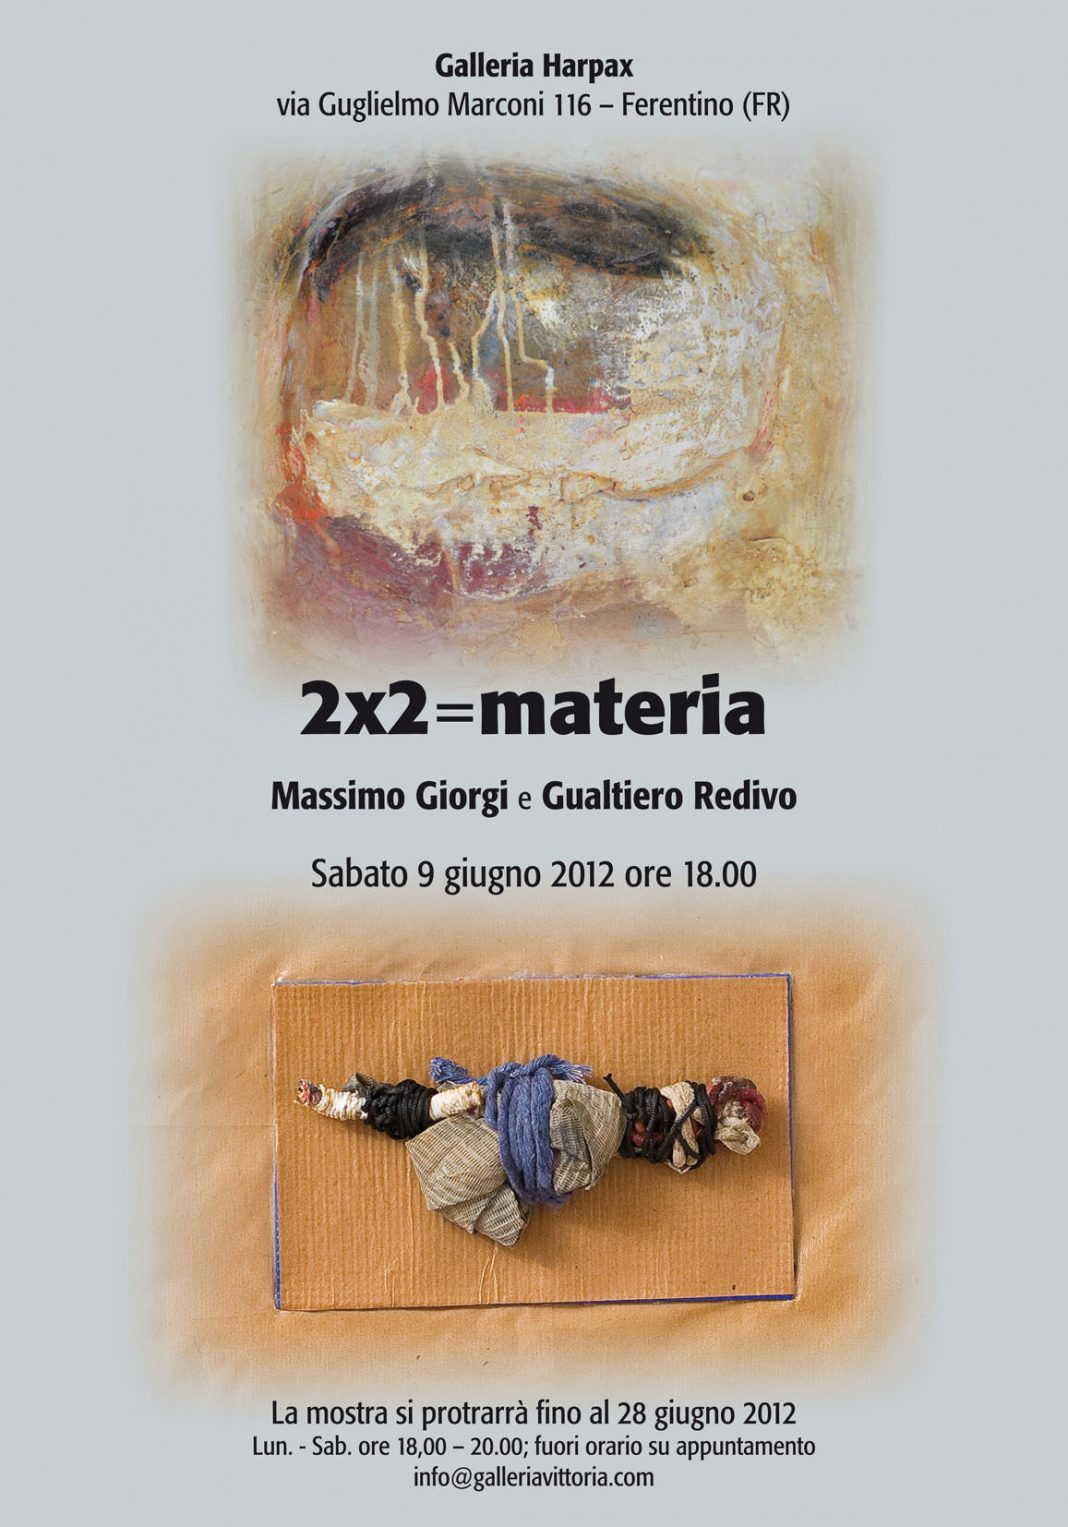 2 x 2 = materiahttps://www.exibart.com/repository/media/eventi/2012/06/2-x-2-materia-1068x1527.jpg